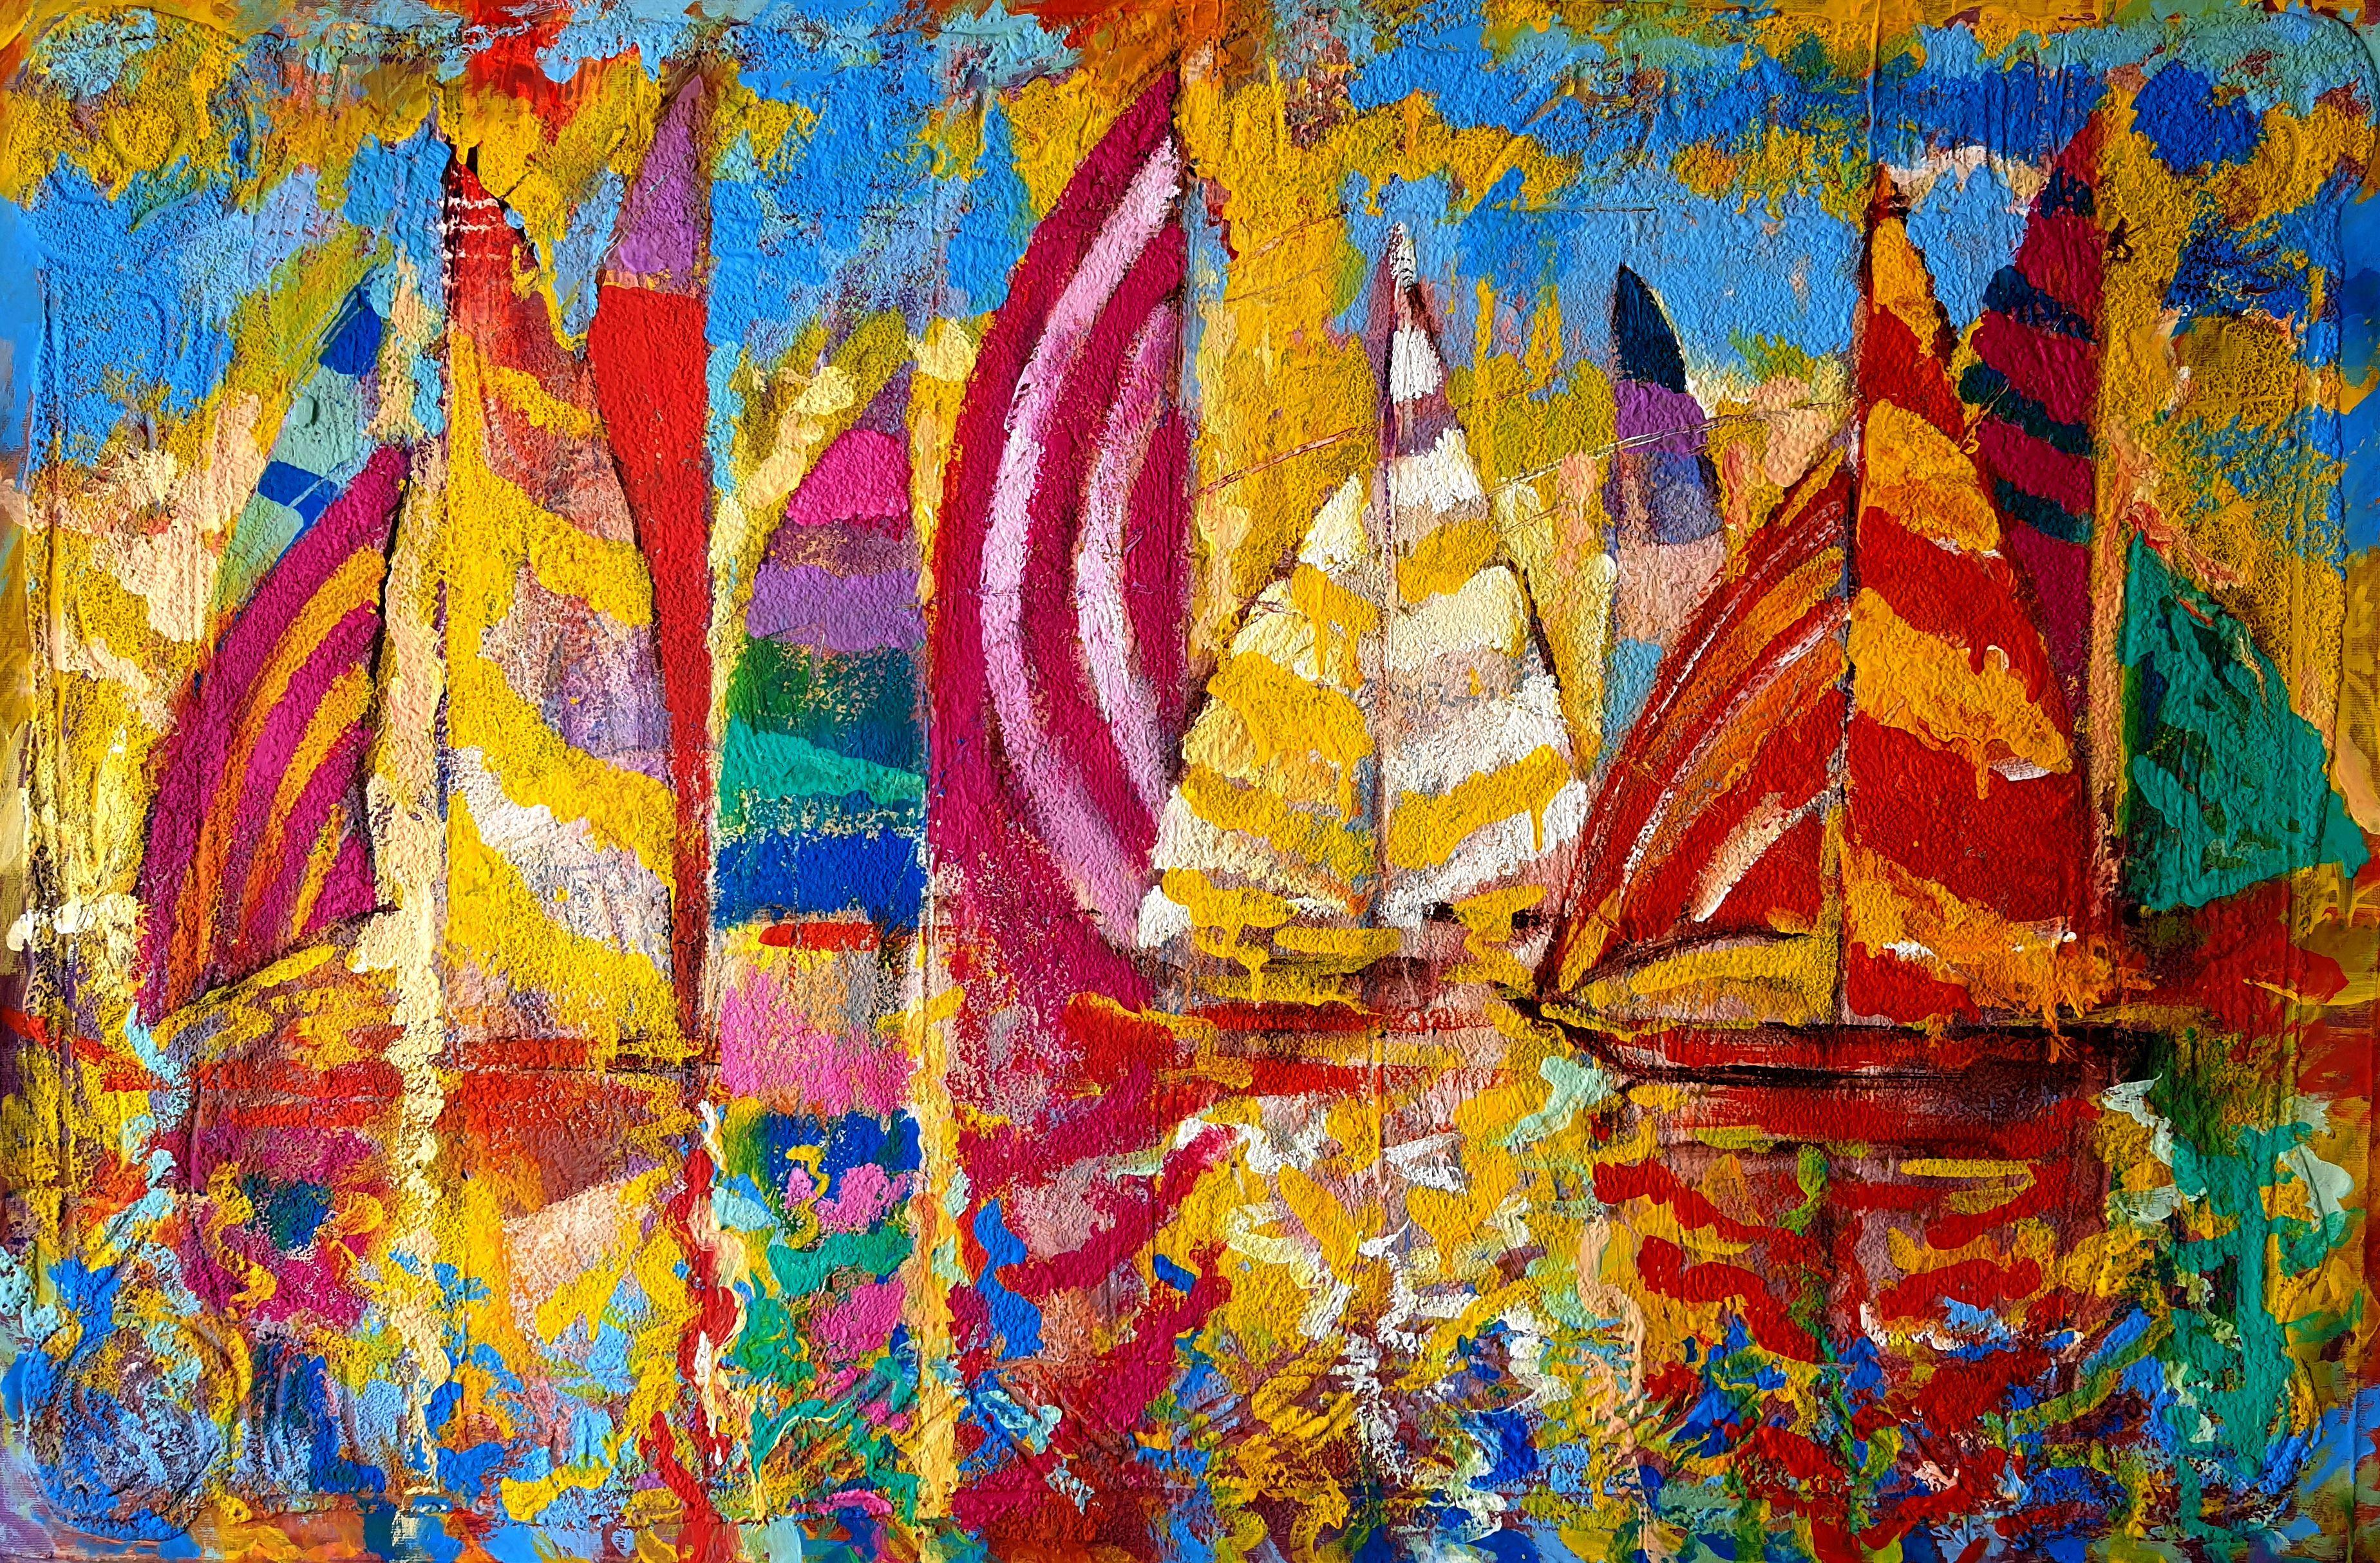 Party of Sails - Impressionist Painting by RAKHMET REDZHEPOV (RAMZI)